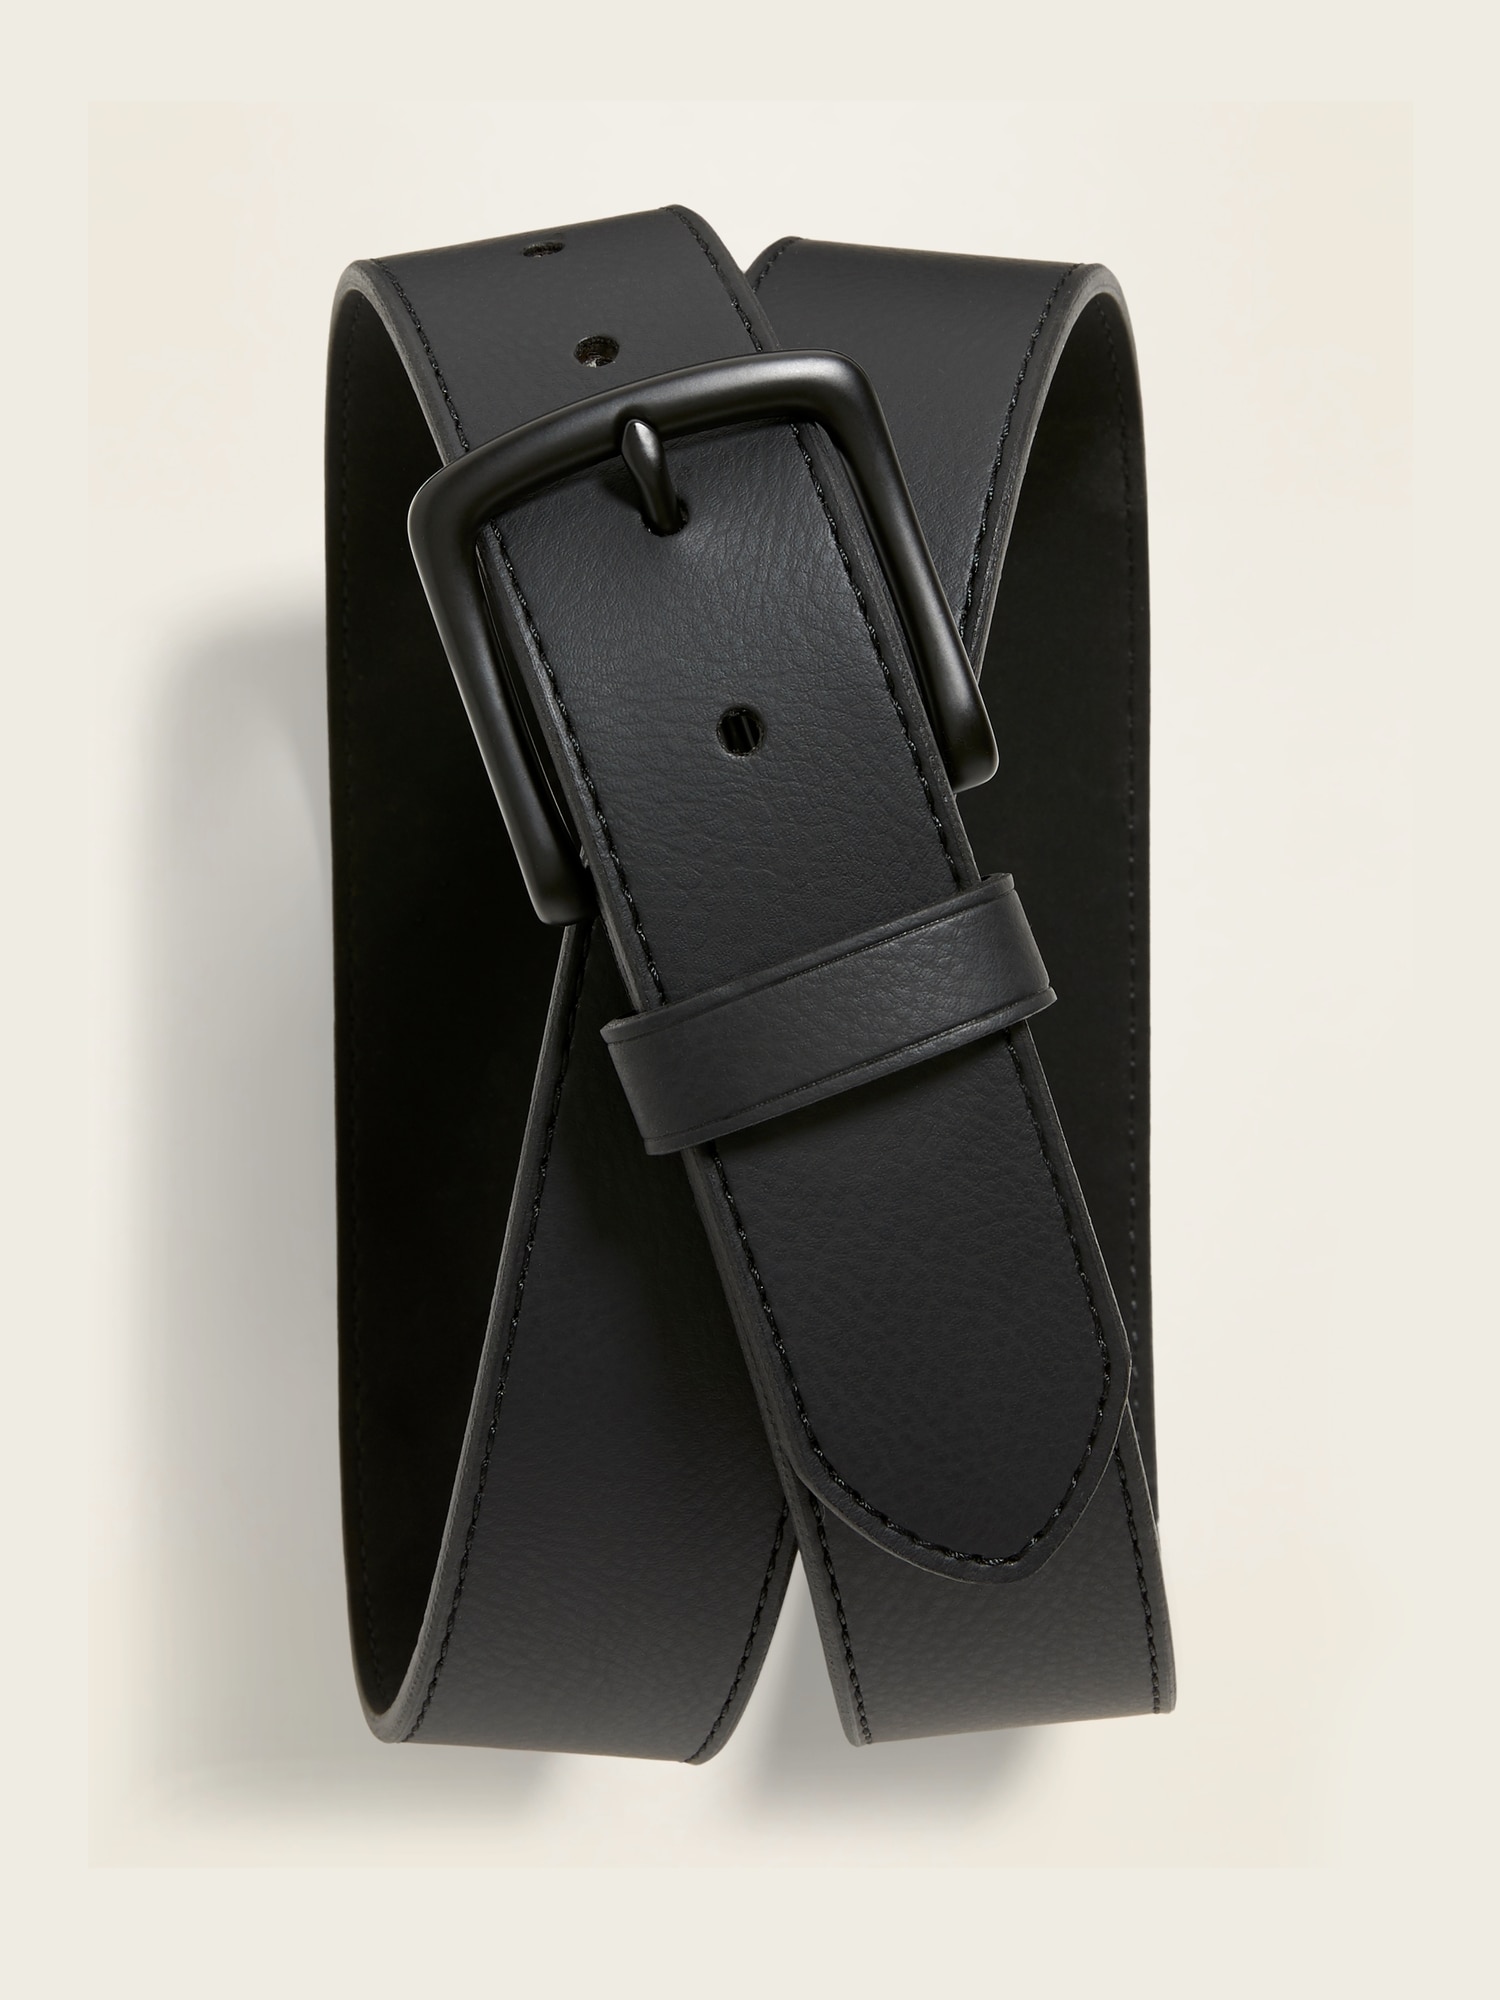 Reversible Faux-Leather Belt For Women (1.25-Inch)